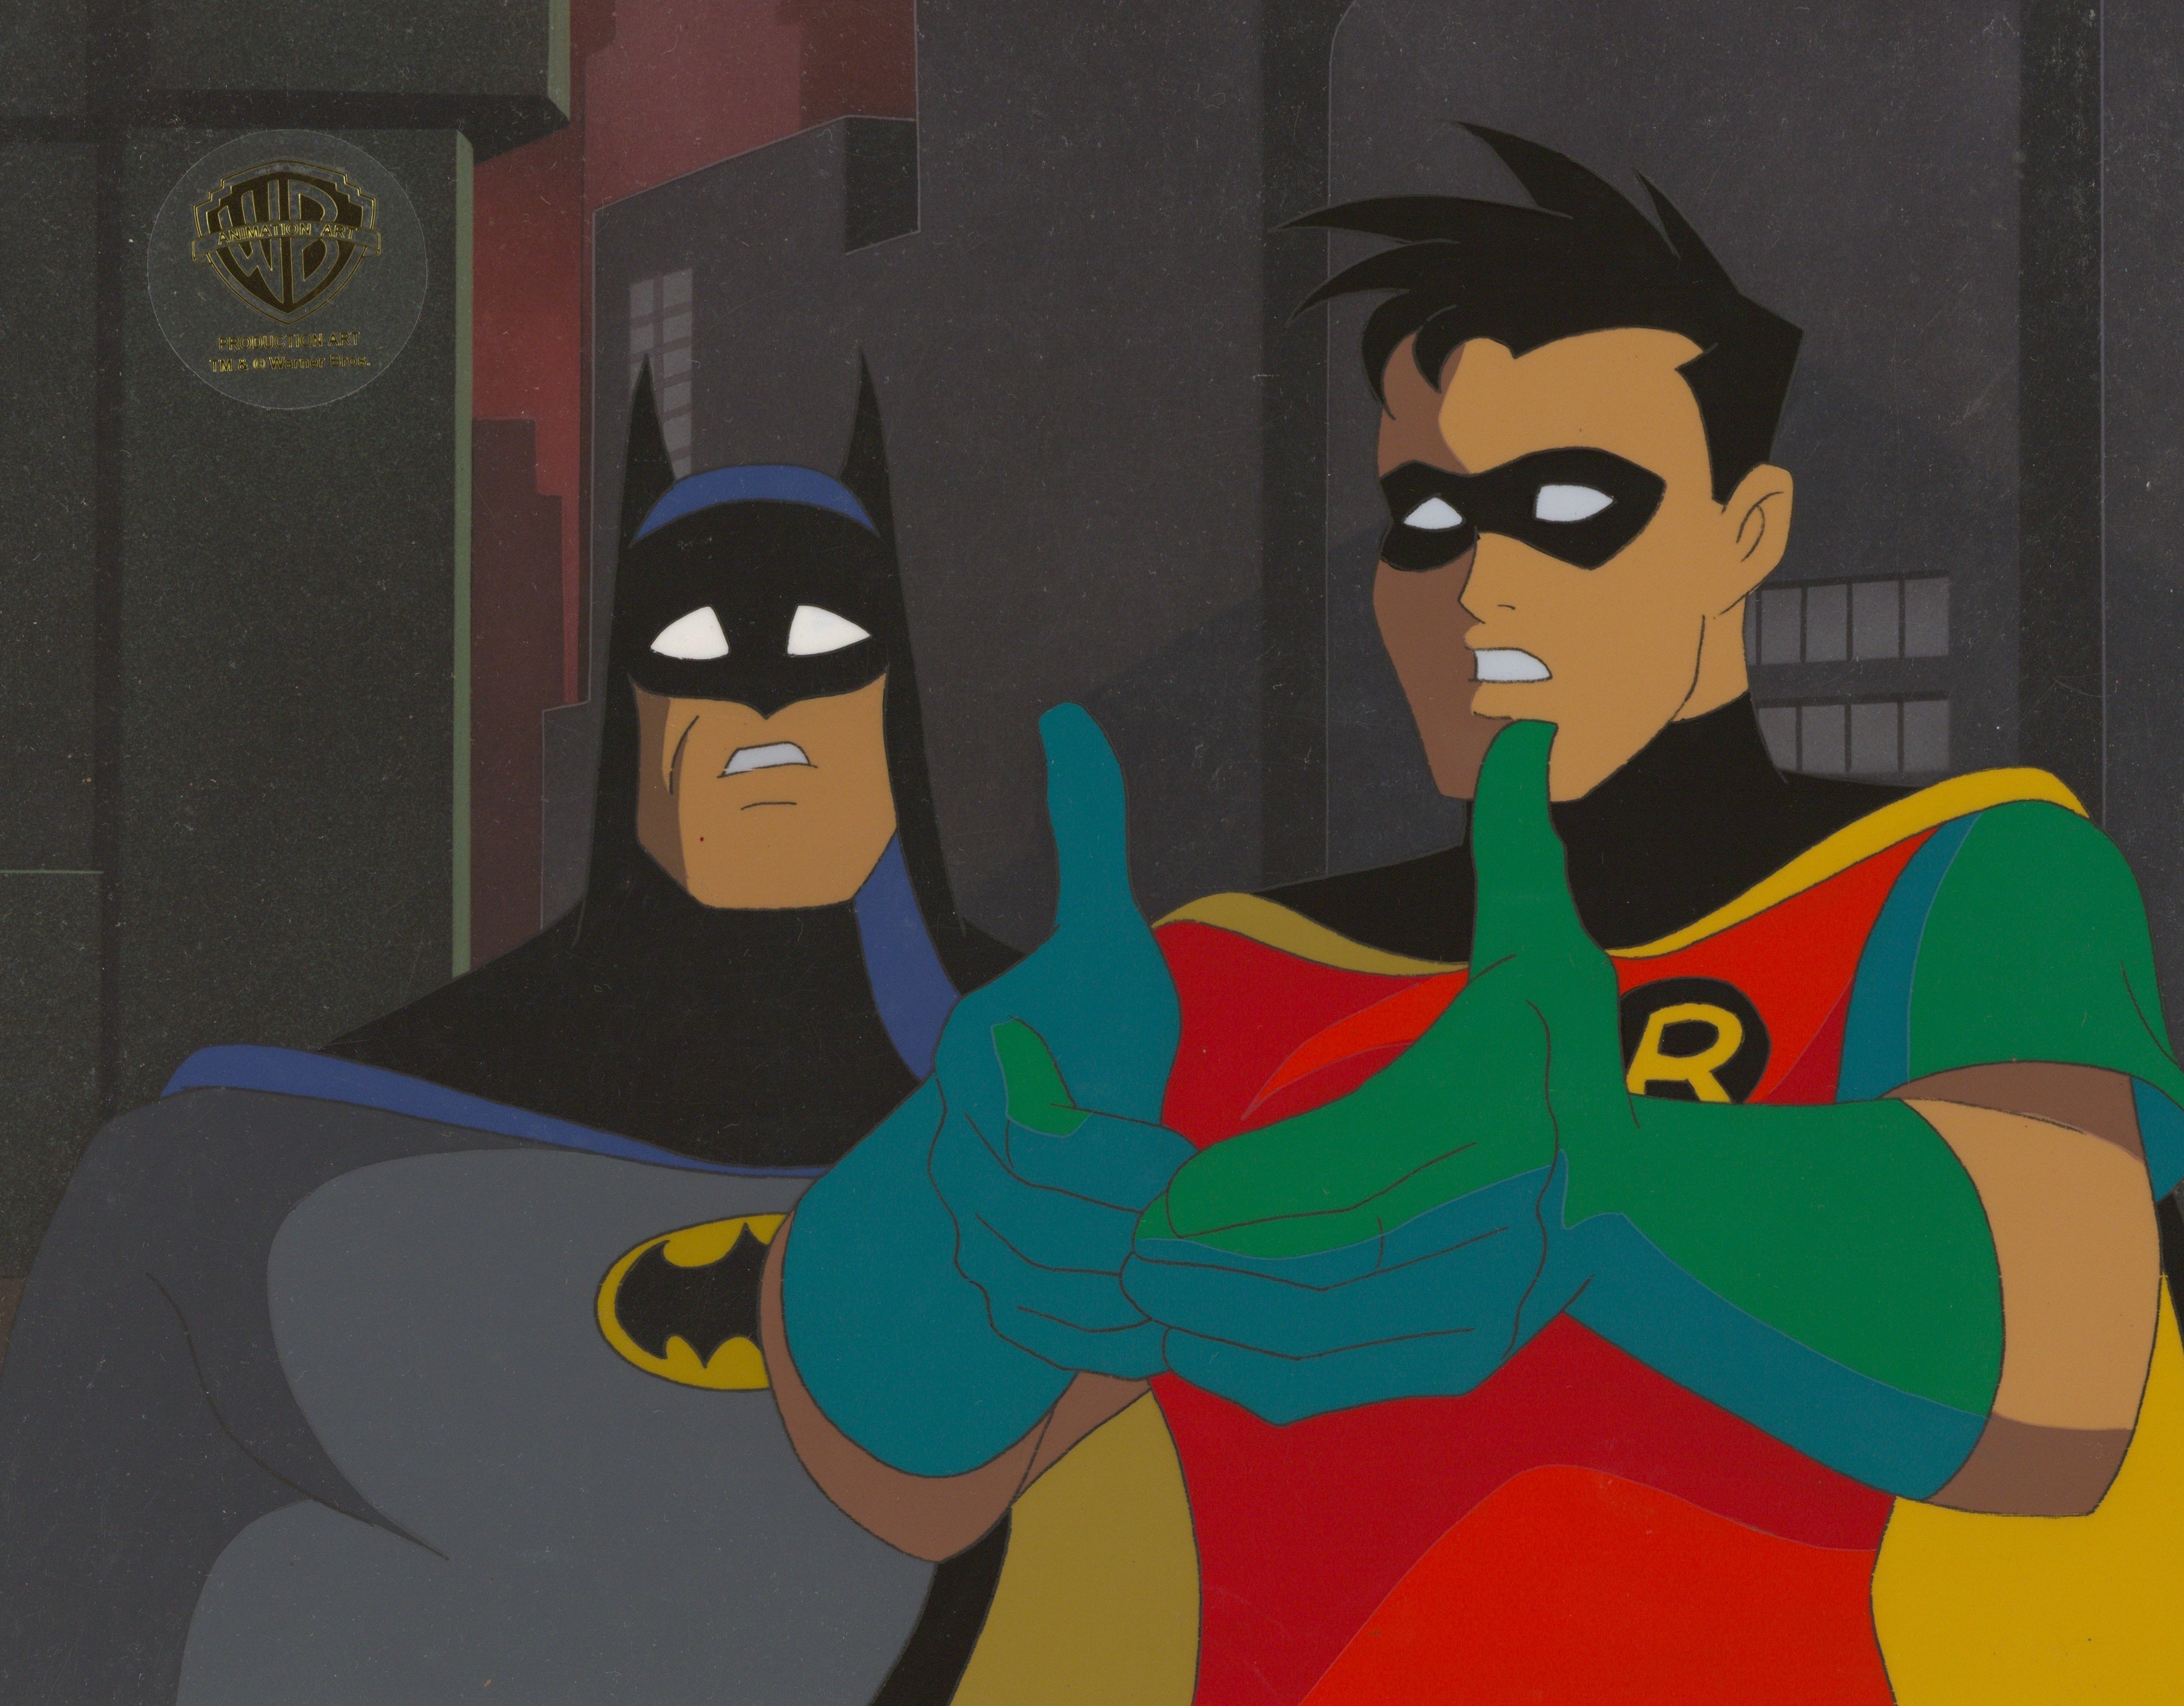 batman animated series robin